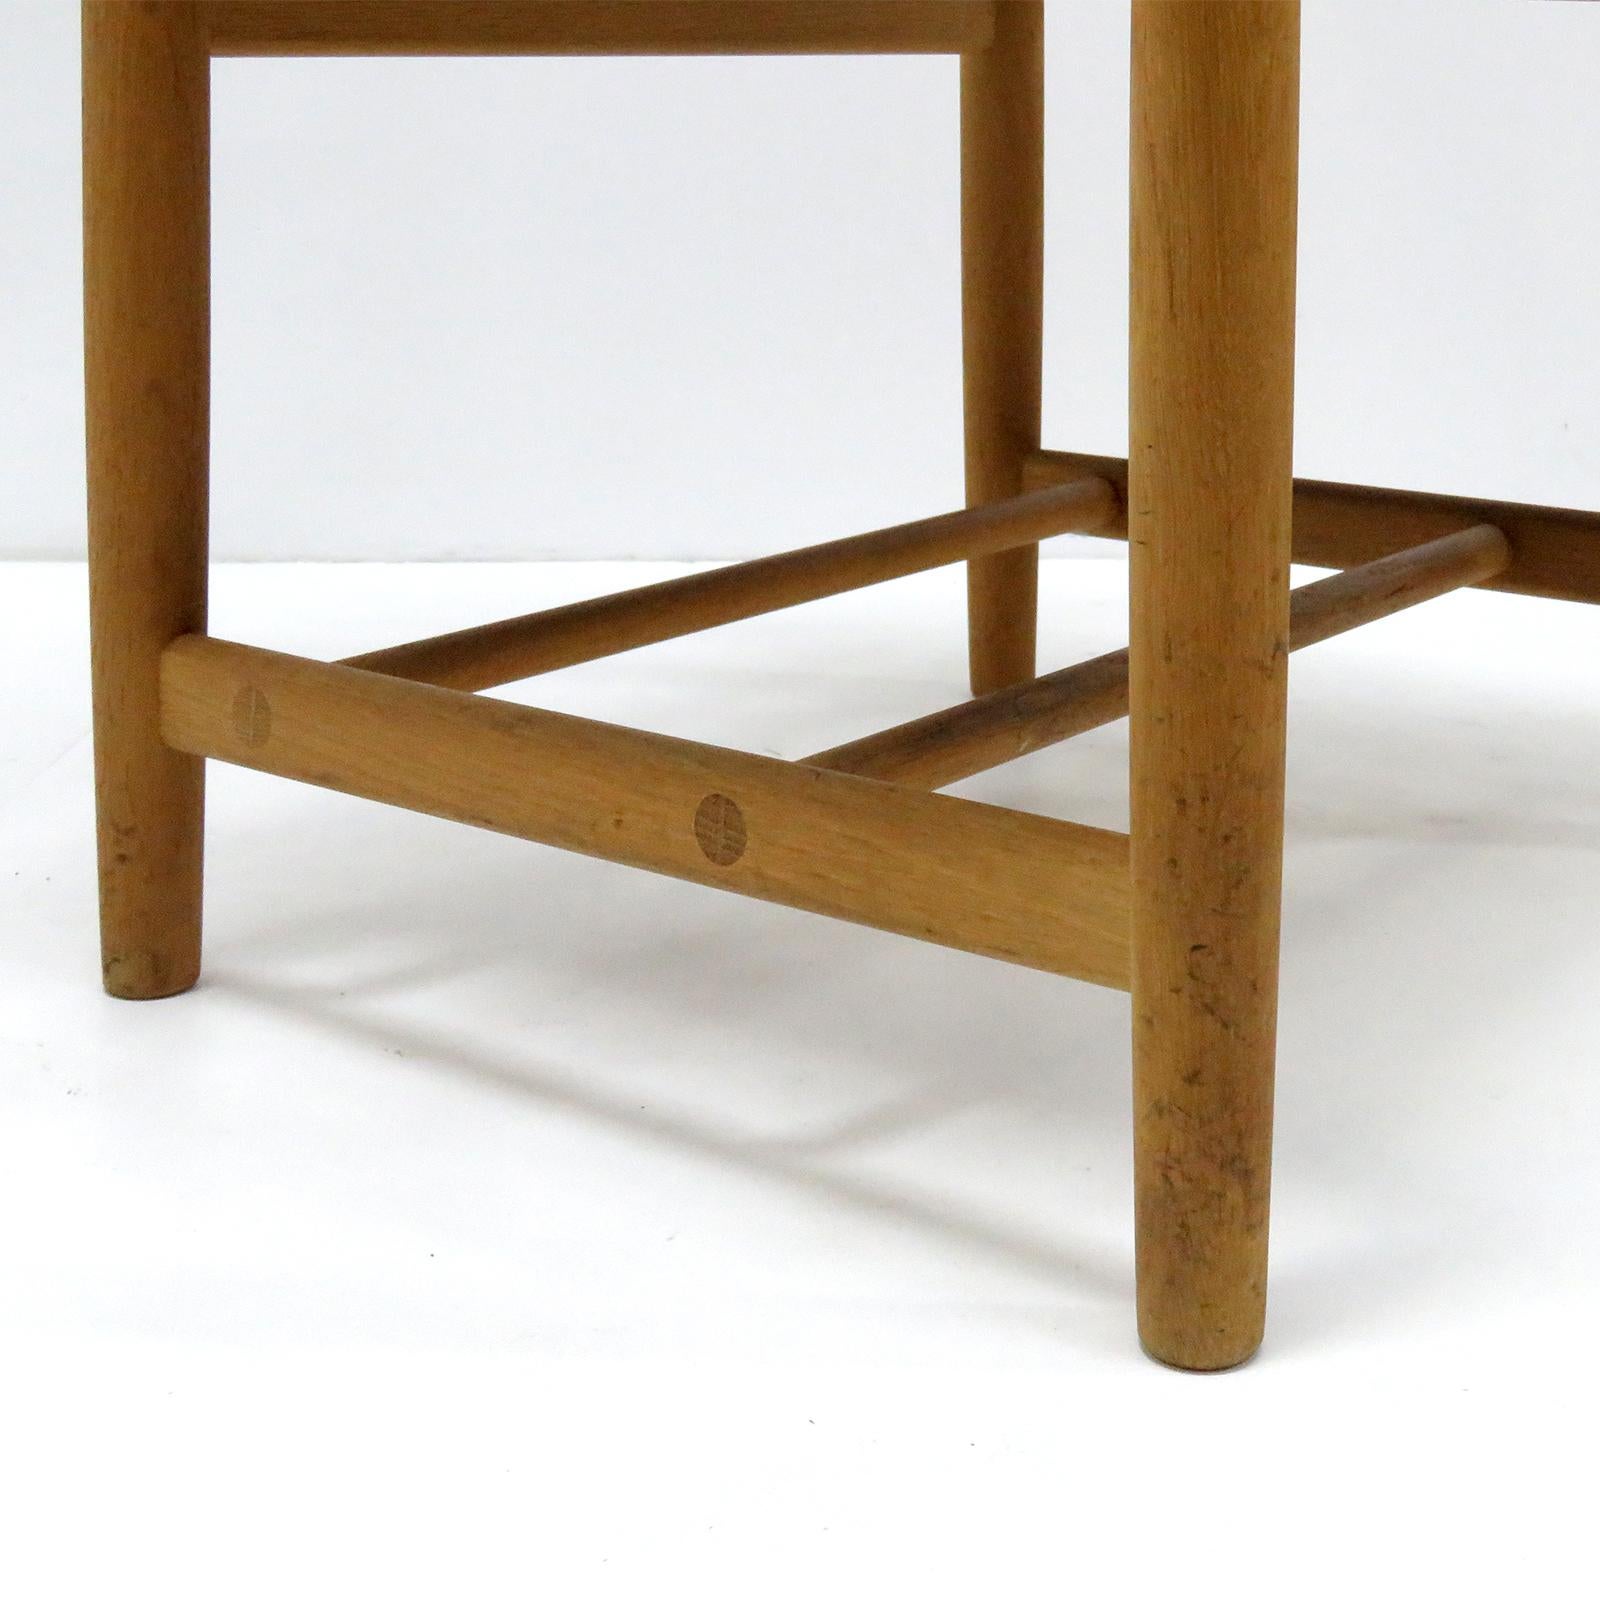 Børge Mogensen 'Hunting' Chairs, Model 3237 2